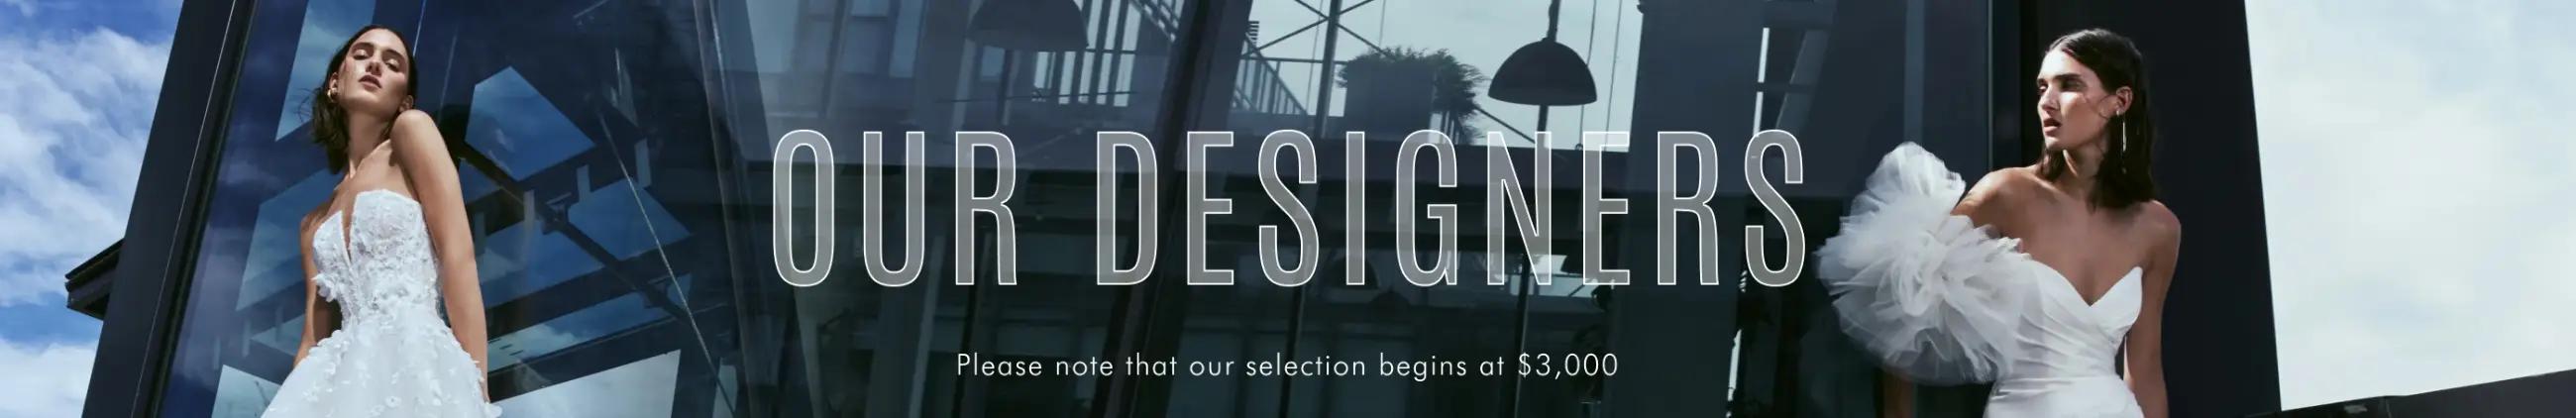 Our Designers Hero - Desktop Image